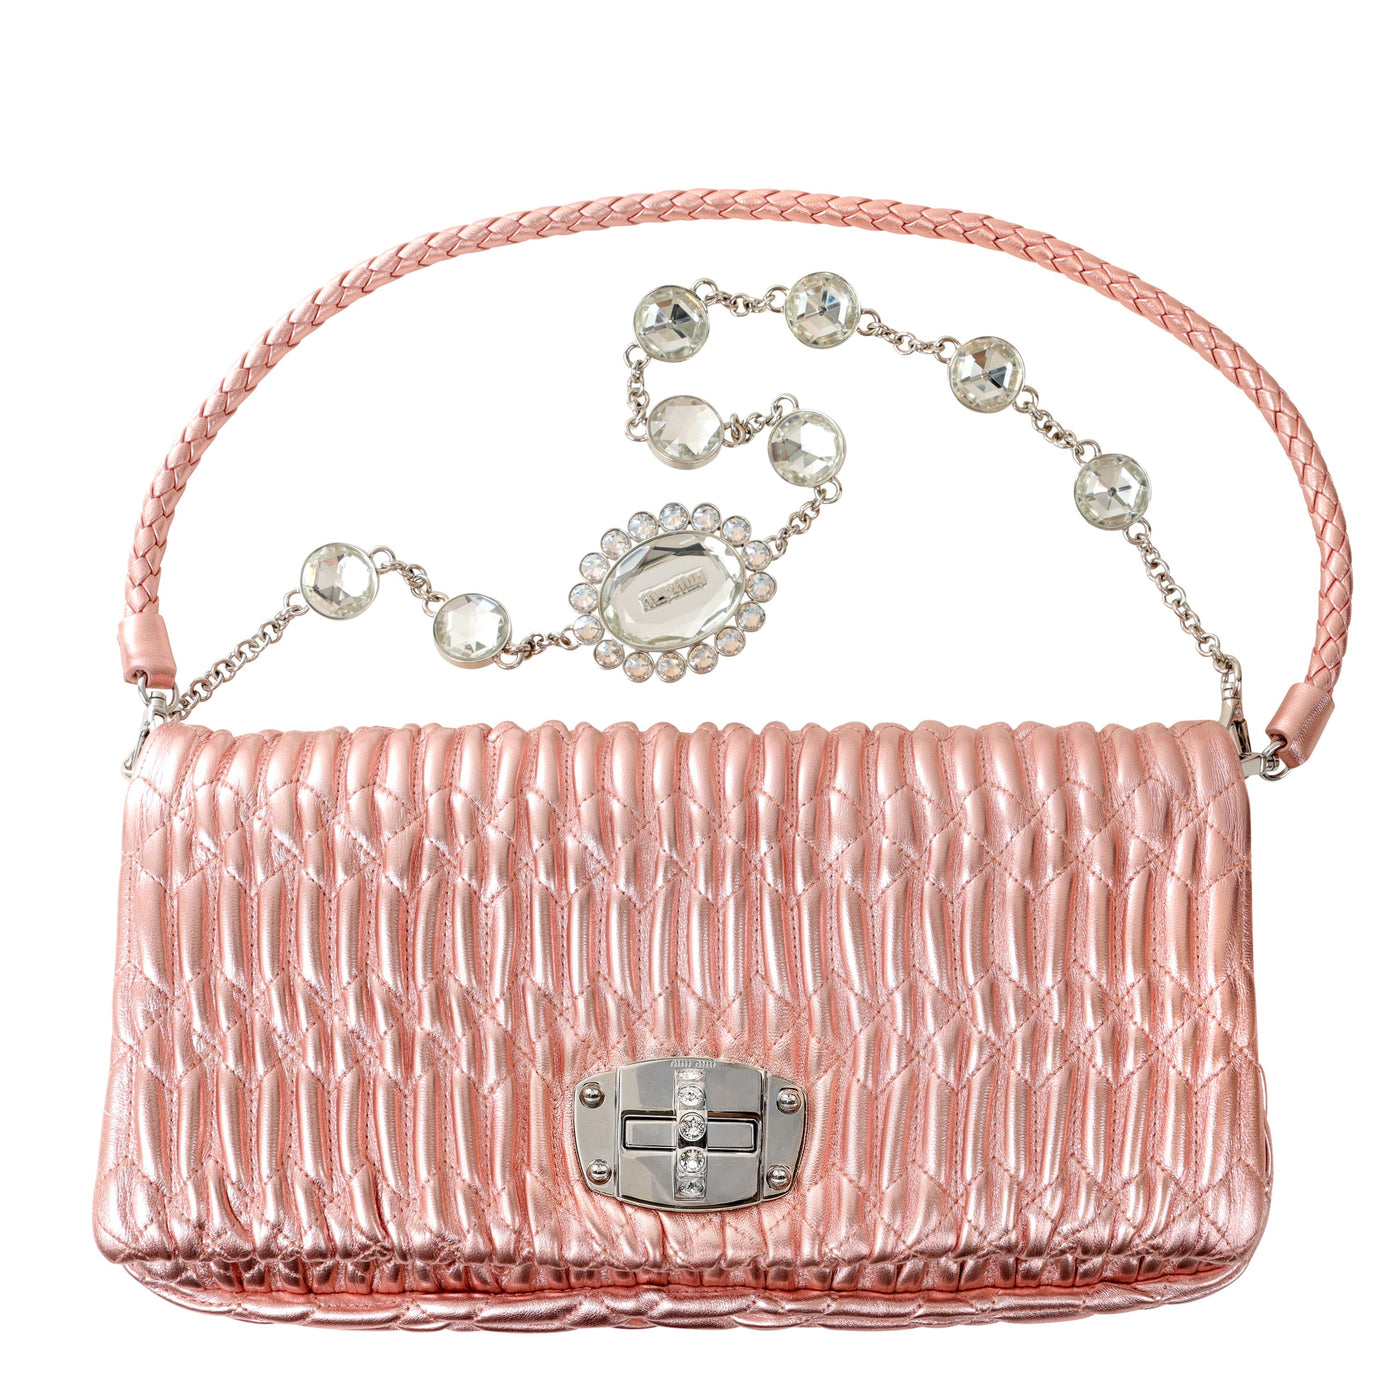 Miu Miu Metallic Pink Iconic Crystal Cloquè  Small Shoulder Bag with Silver Hardware